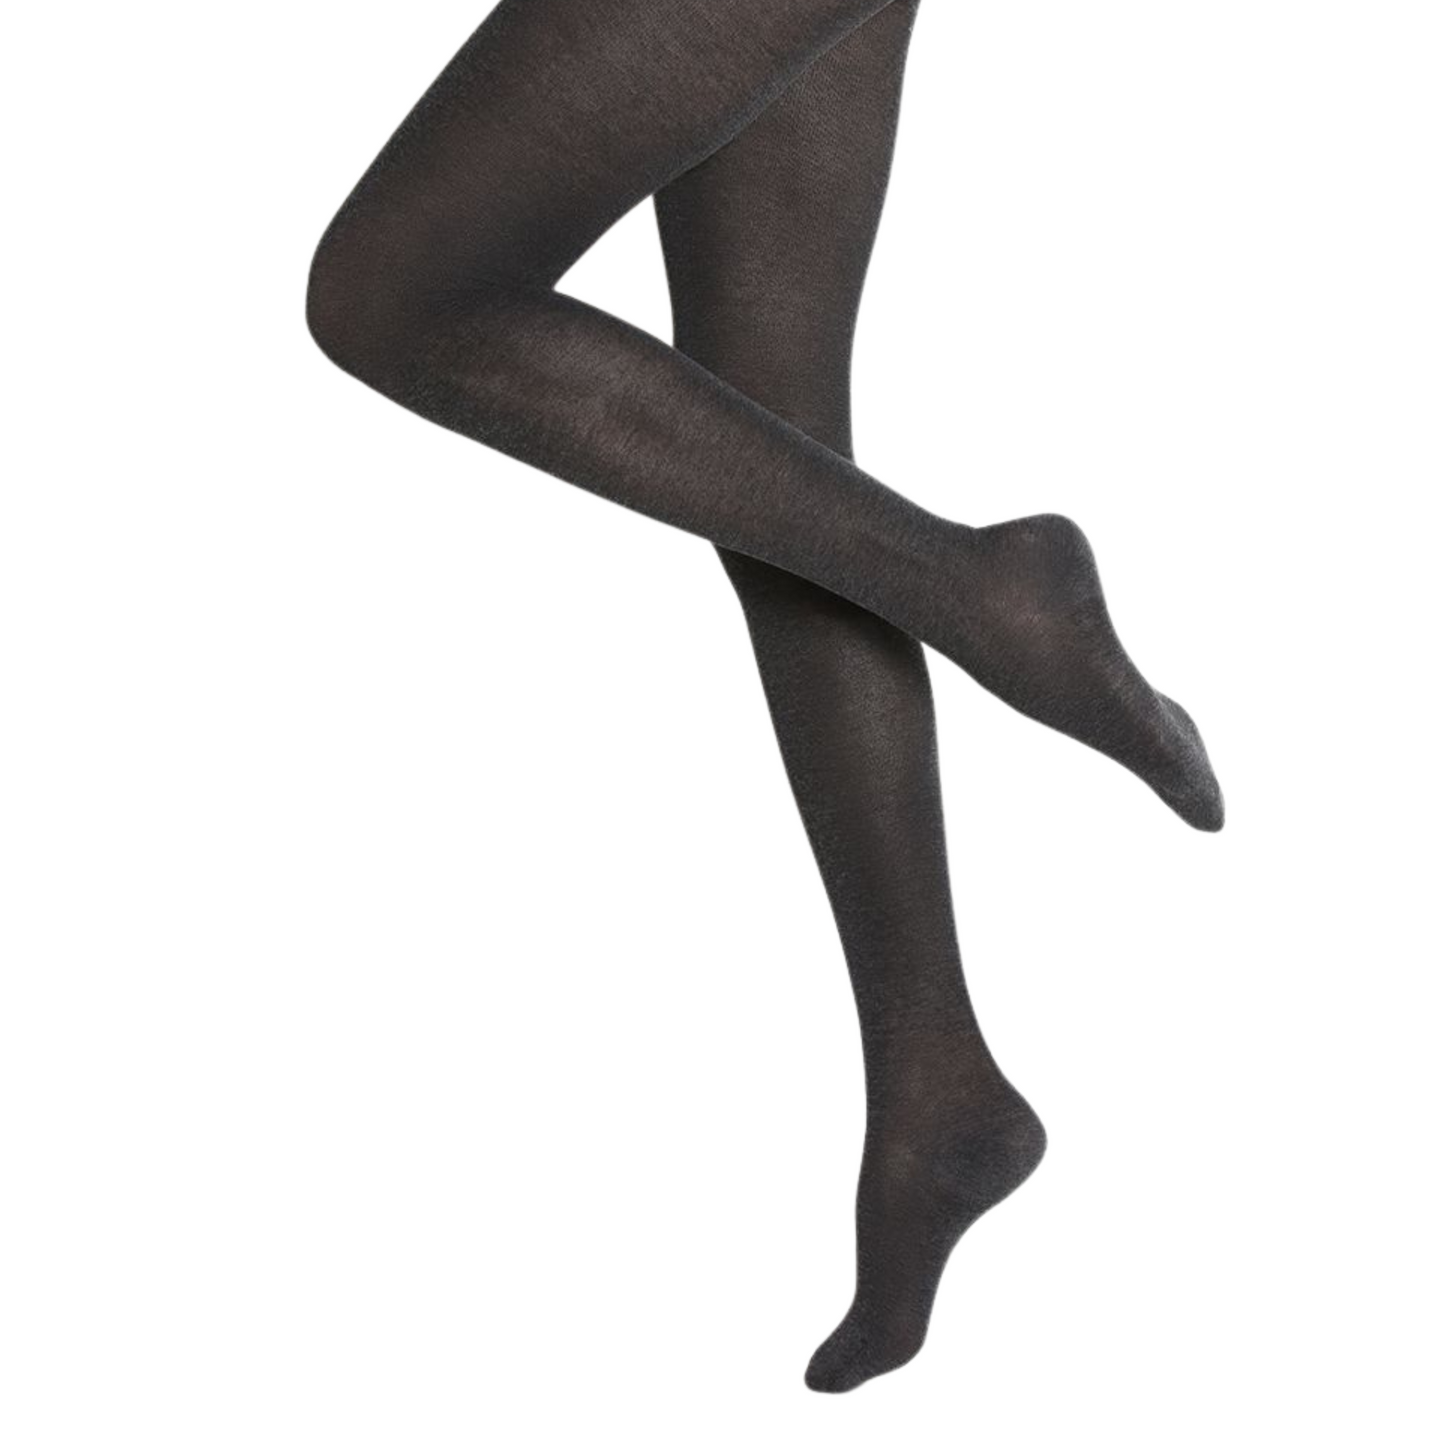 Image of plain grey semi-translucent tights on posed legs.